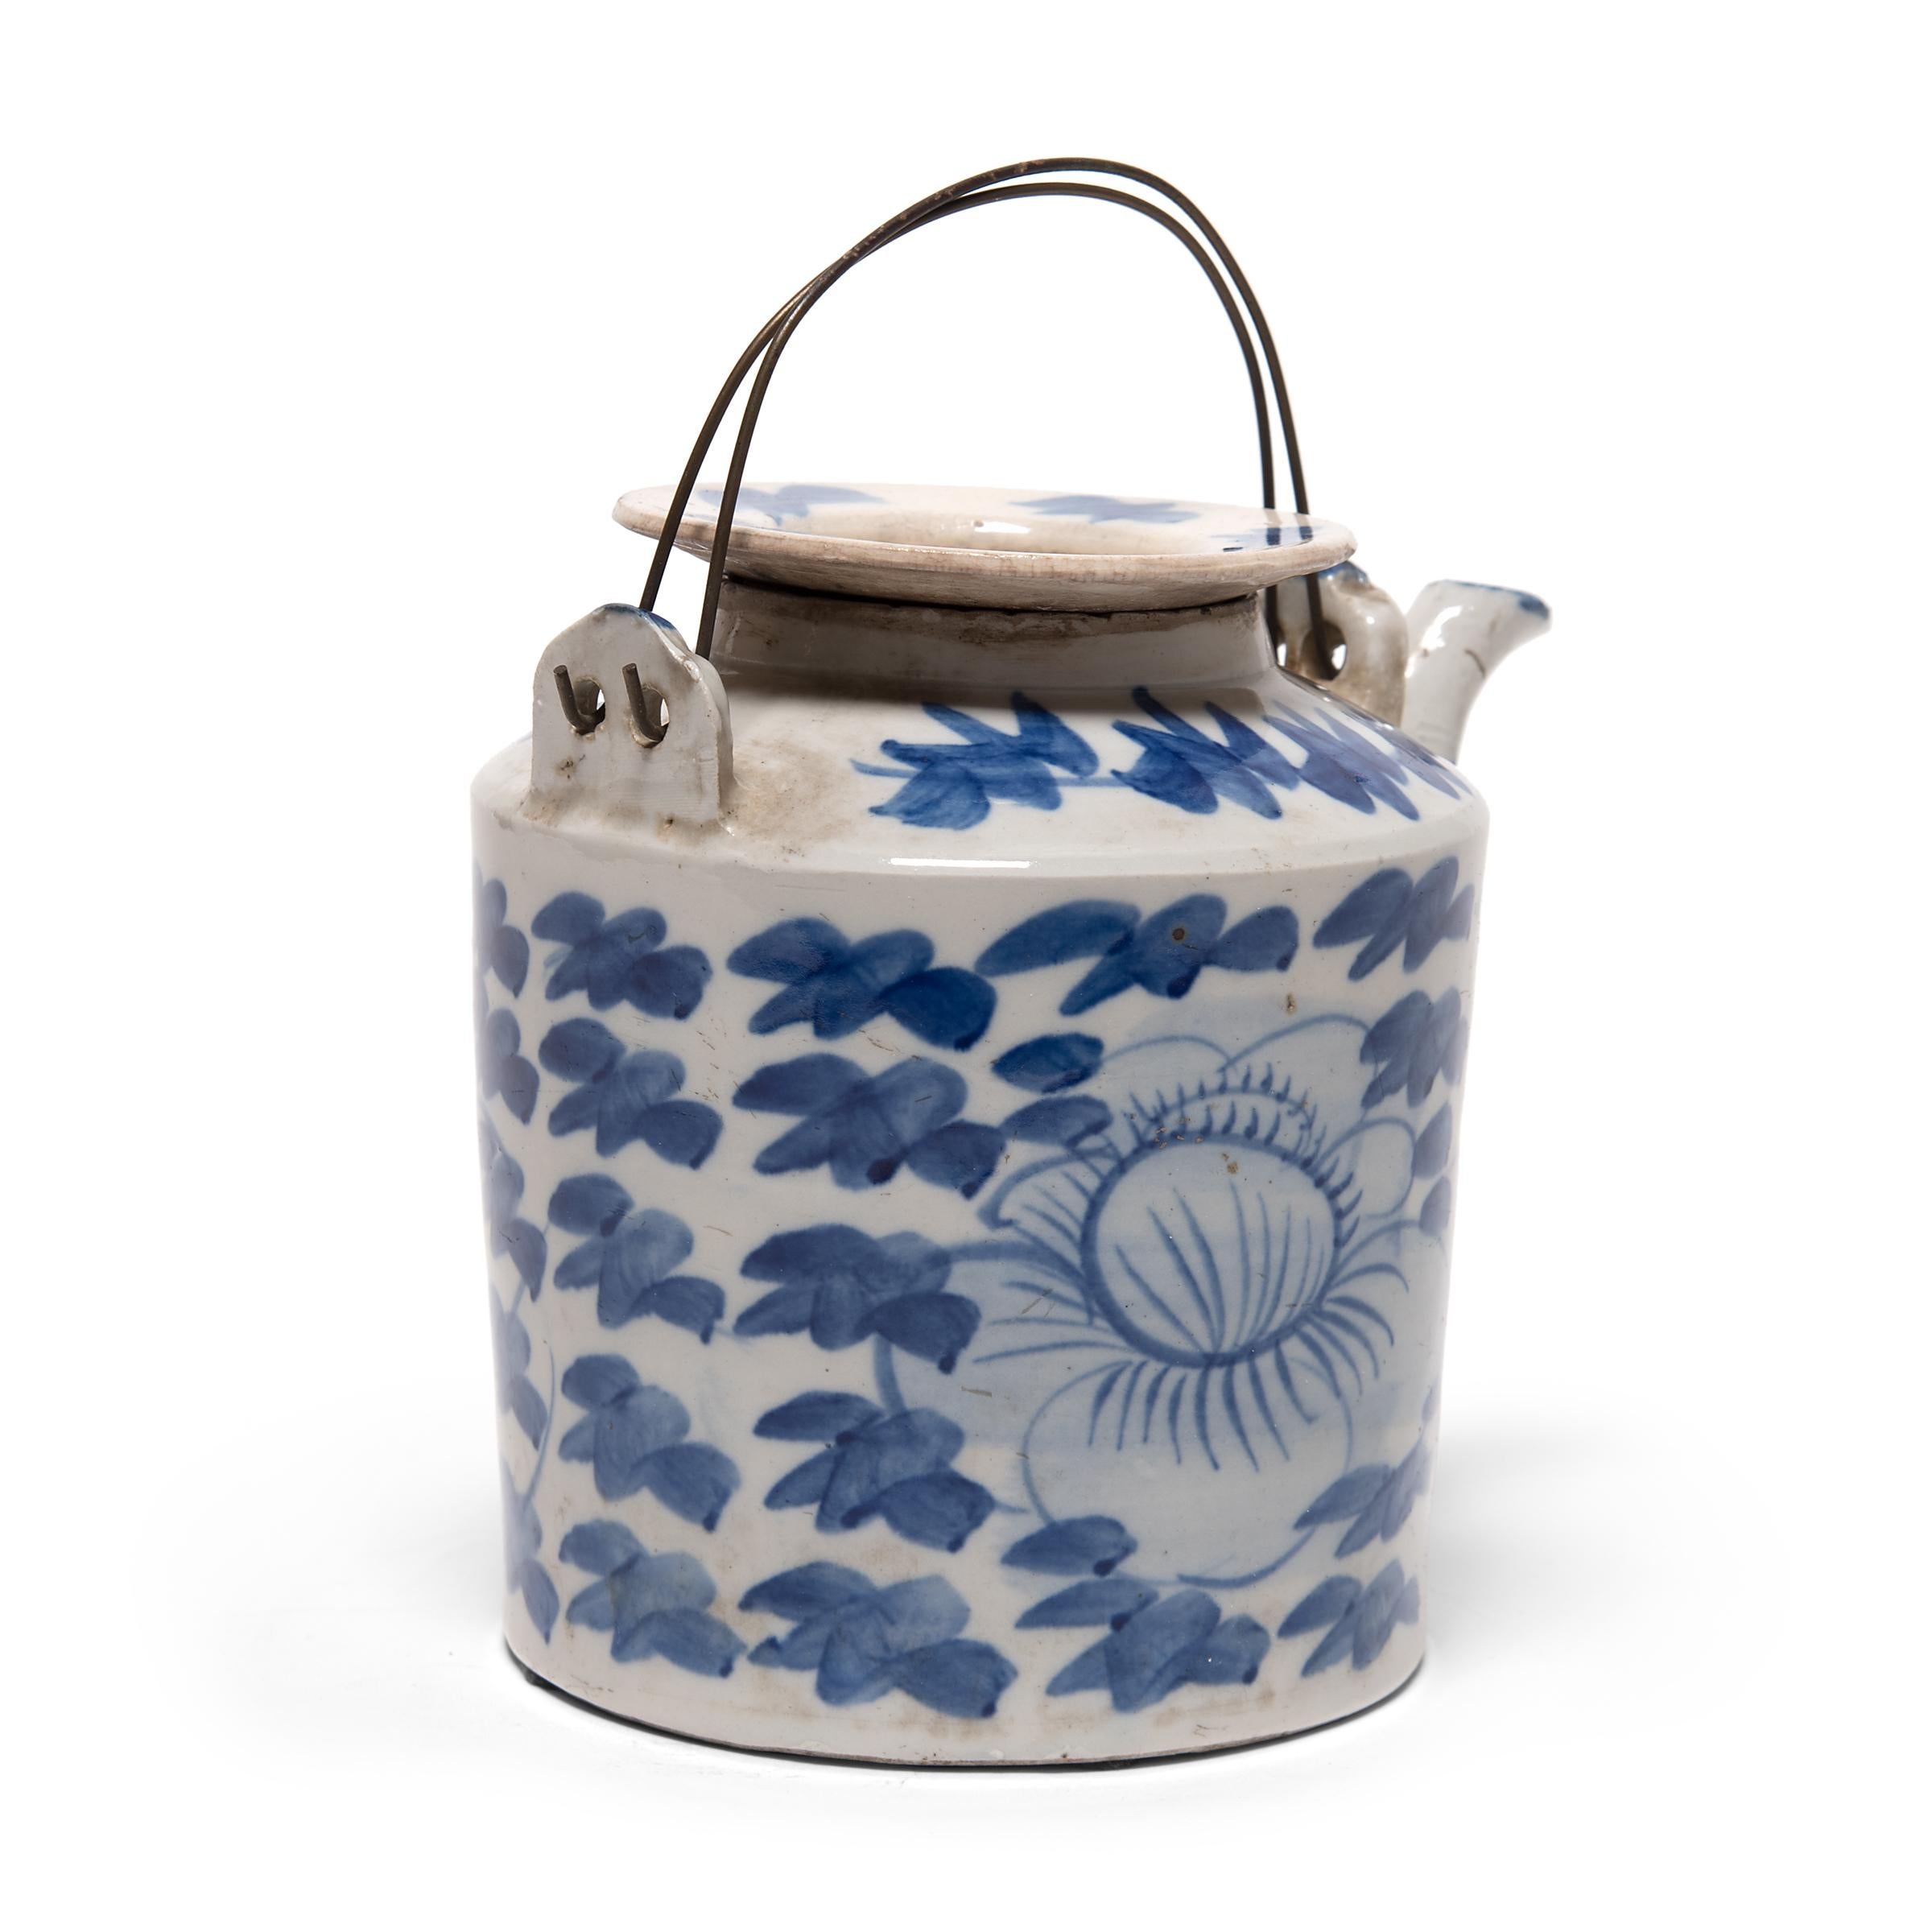 Glazed Chinese Blue and White Porcelain Tea Pot